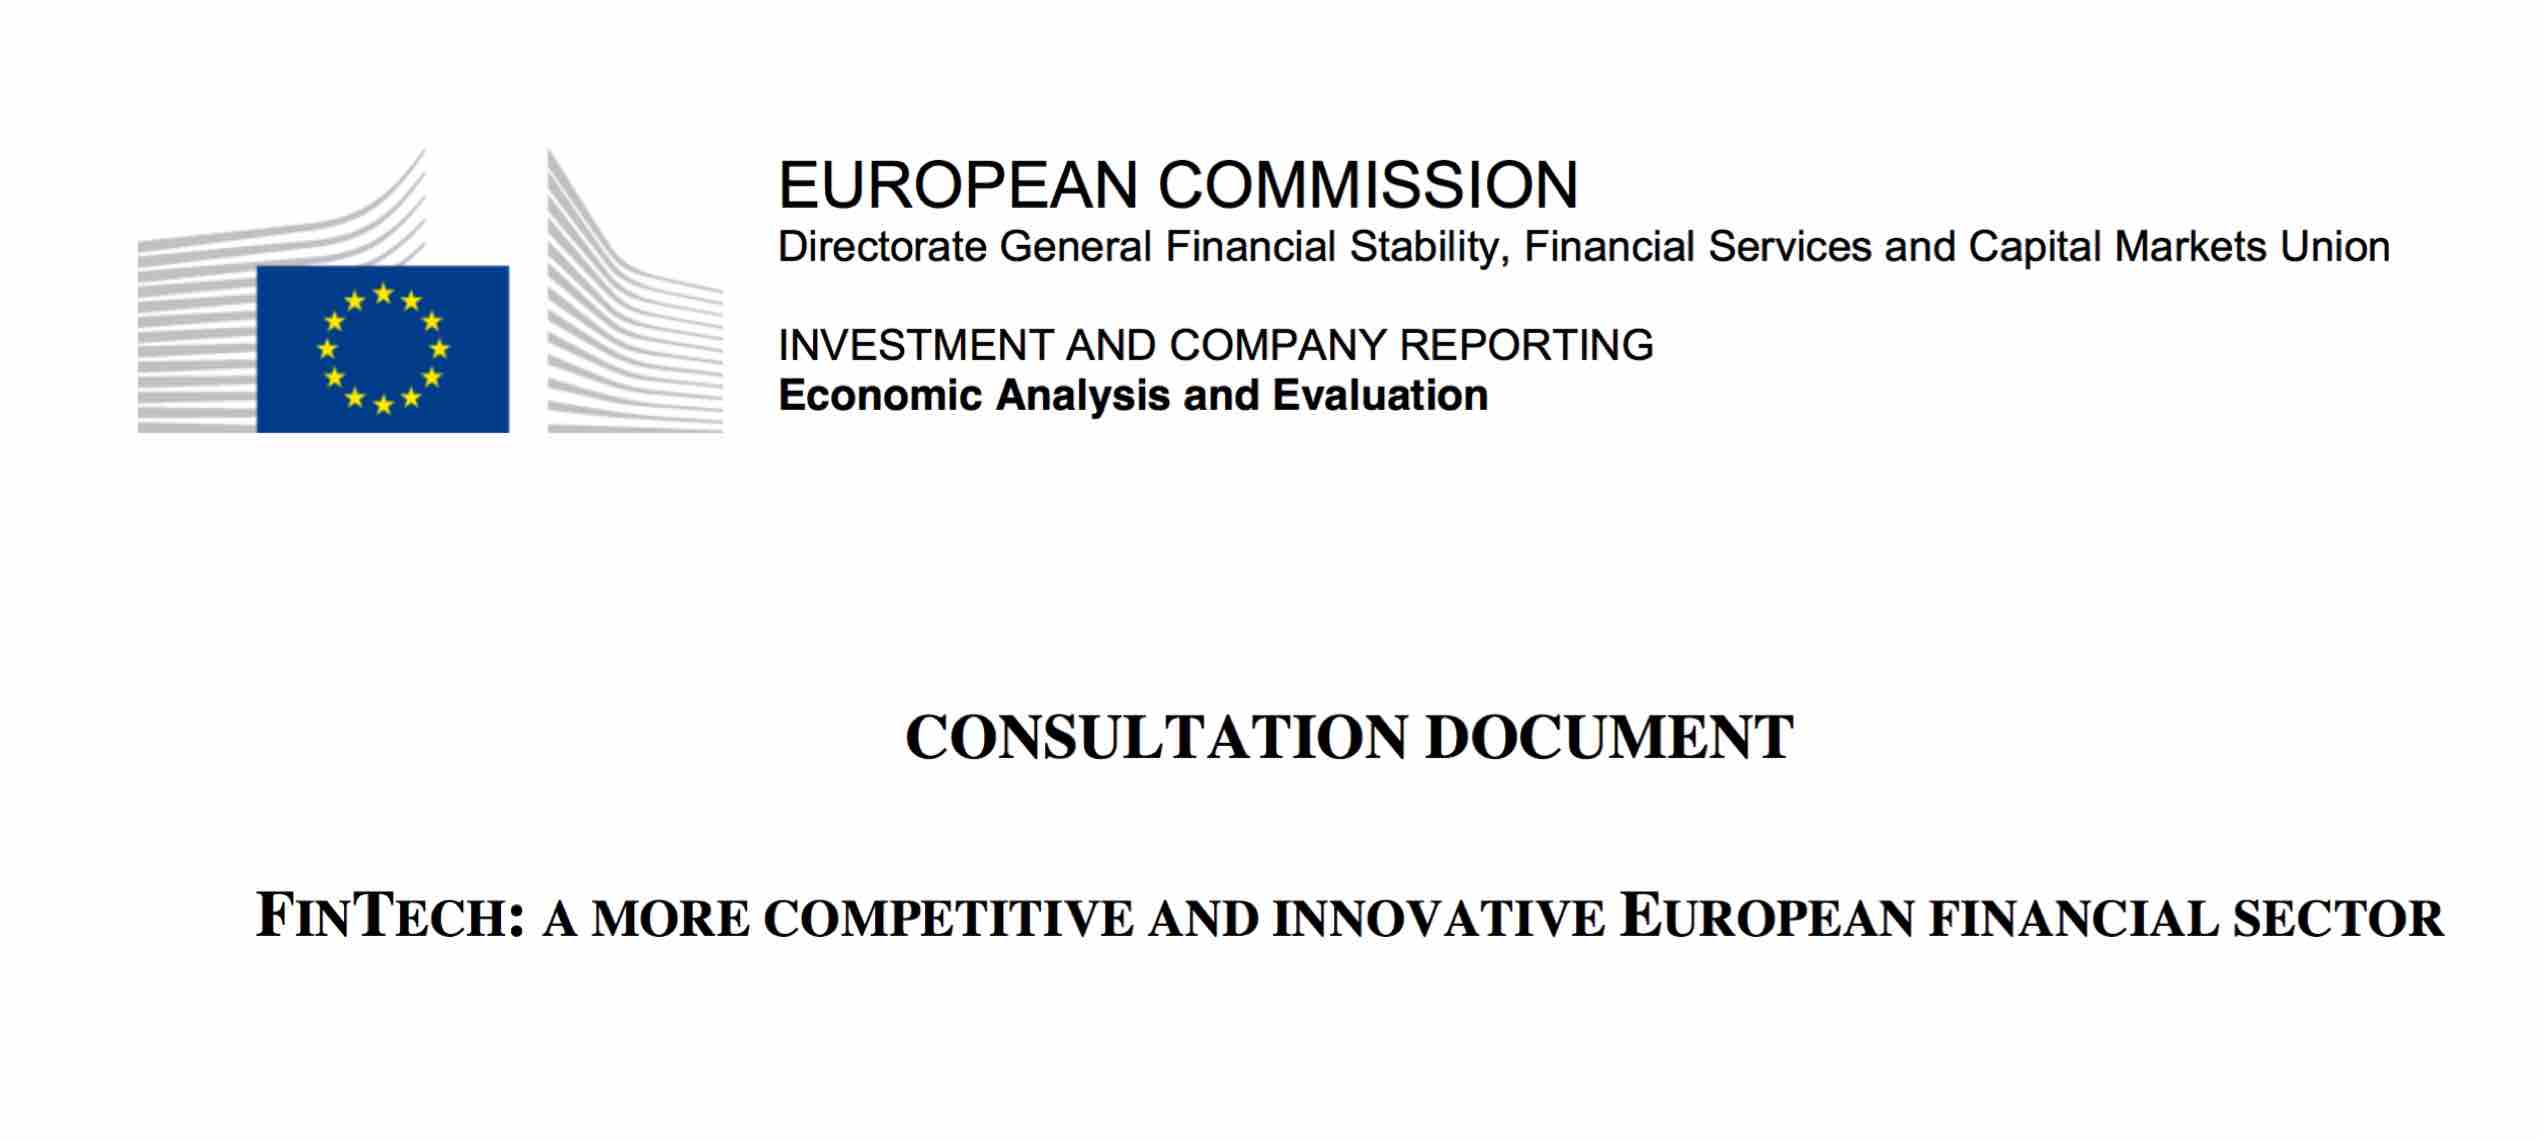 Europai Bizottsag FinTech Versenykepesebb es innovativabb europai penzugyi szektor